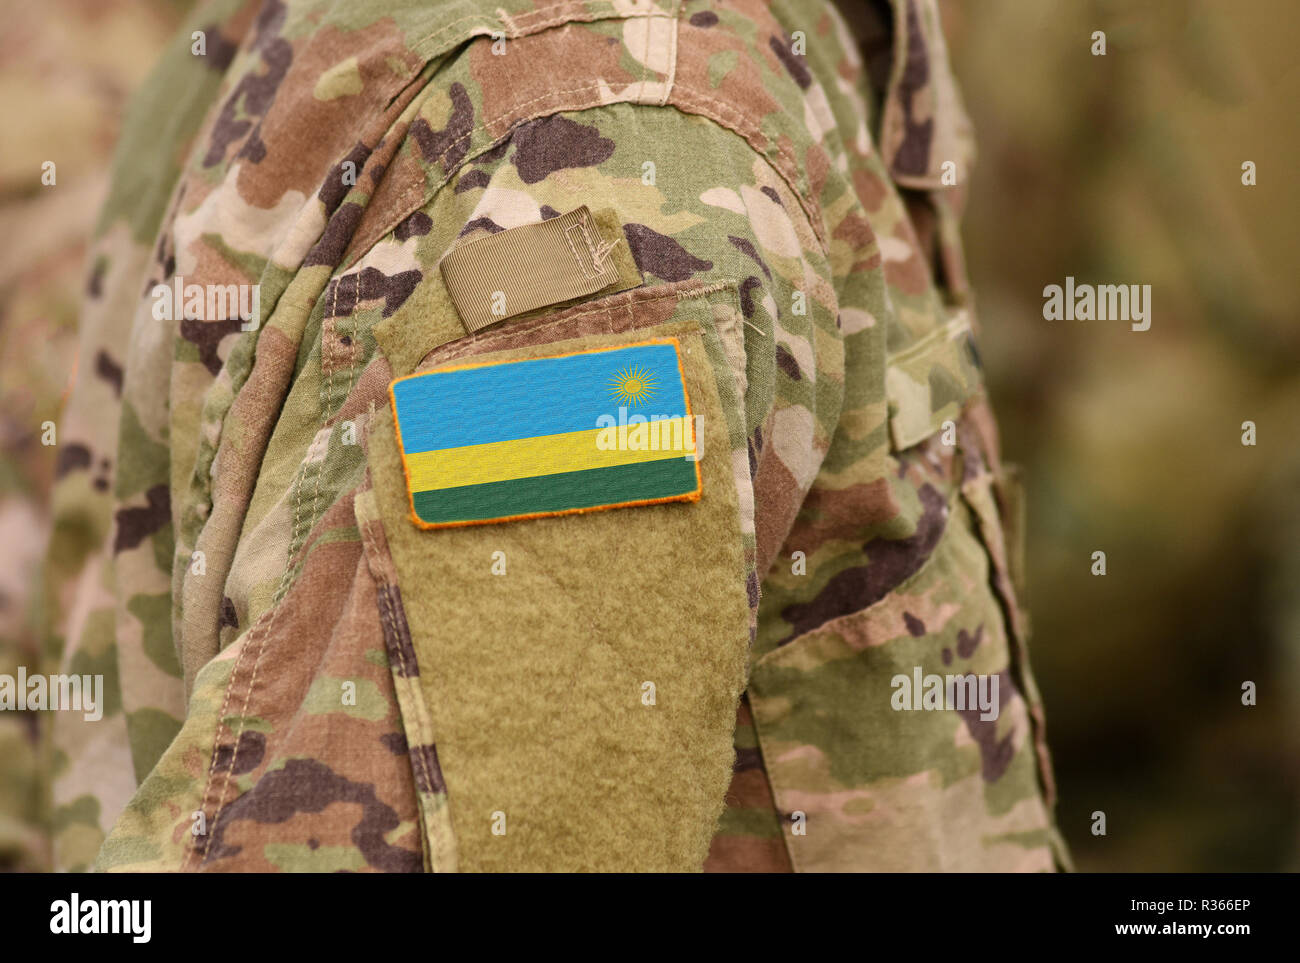 Rwanda flag on soldiers arm. Rwanda troops (collage) Stock Photo